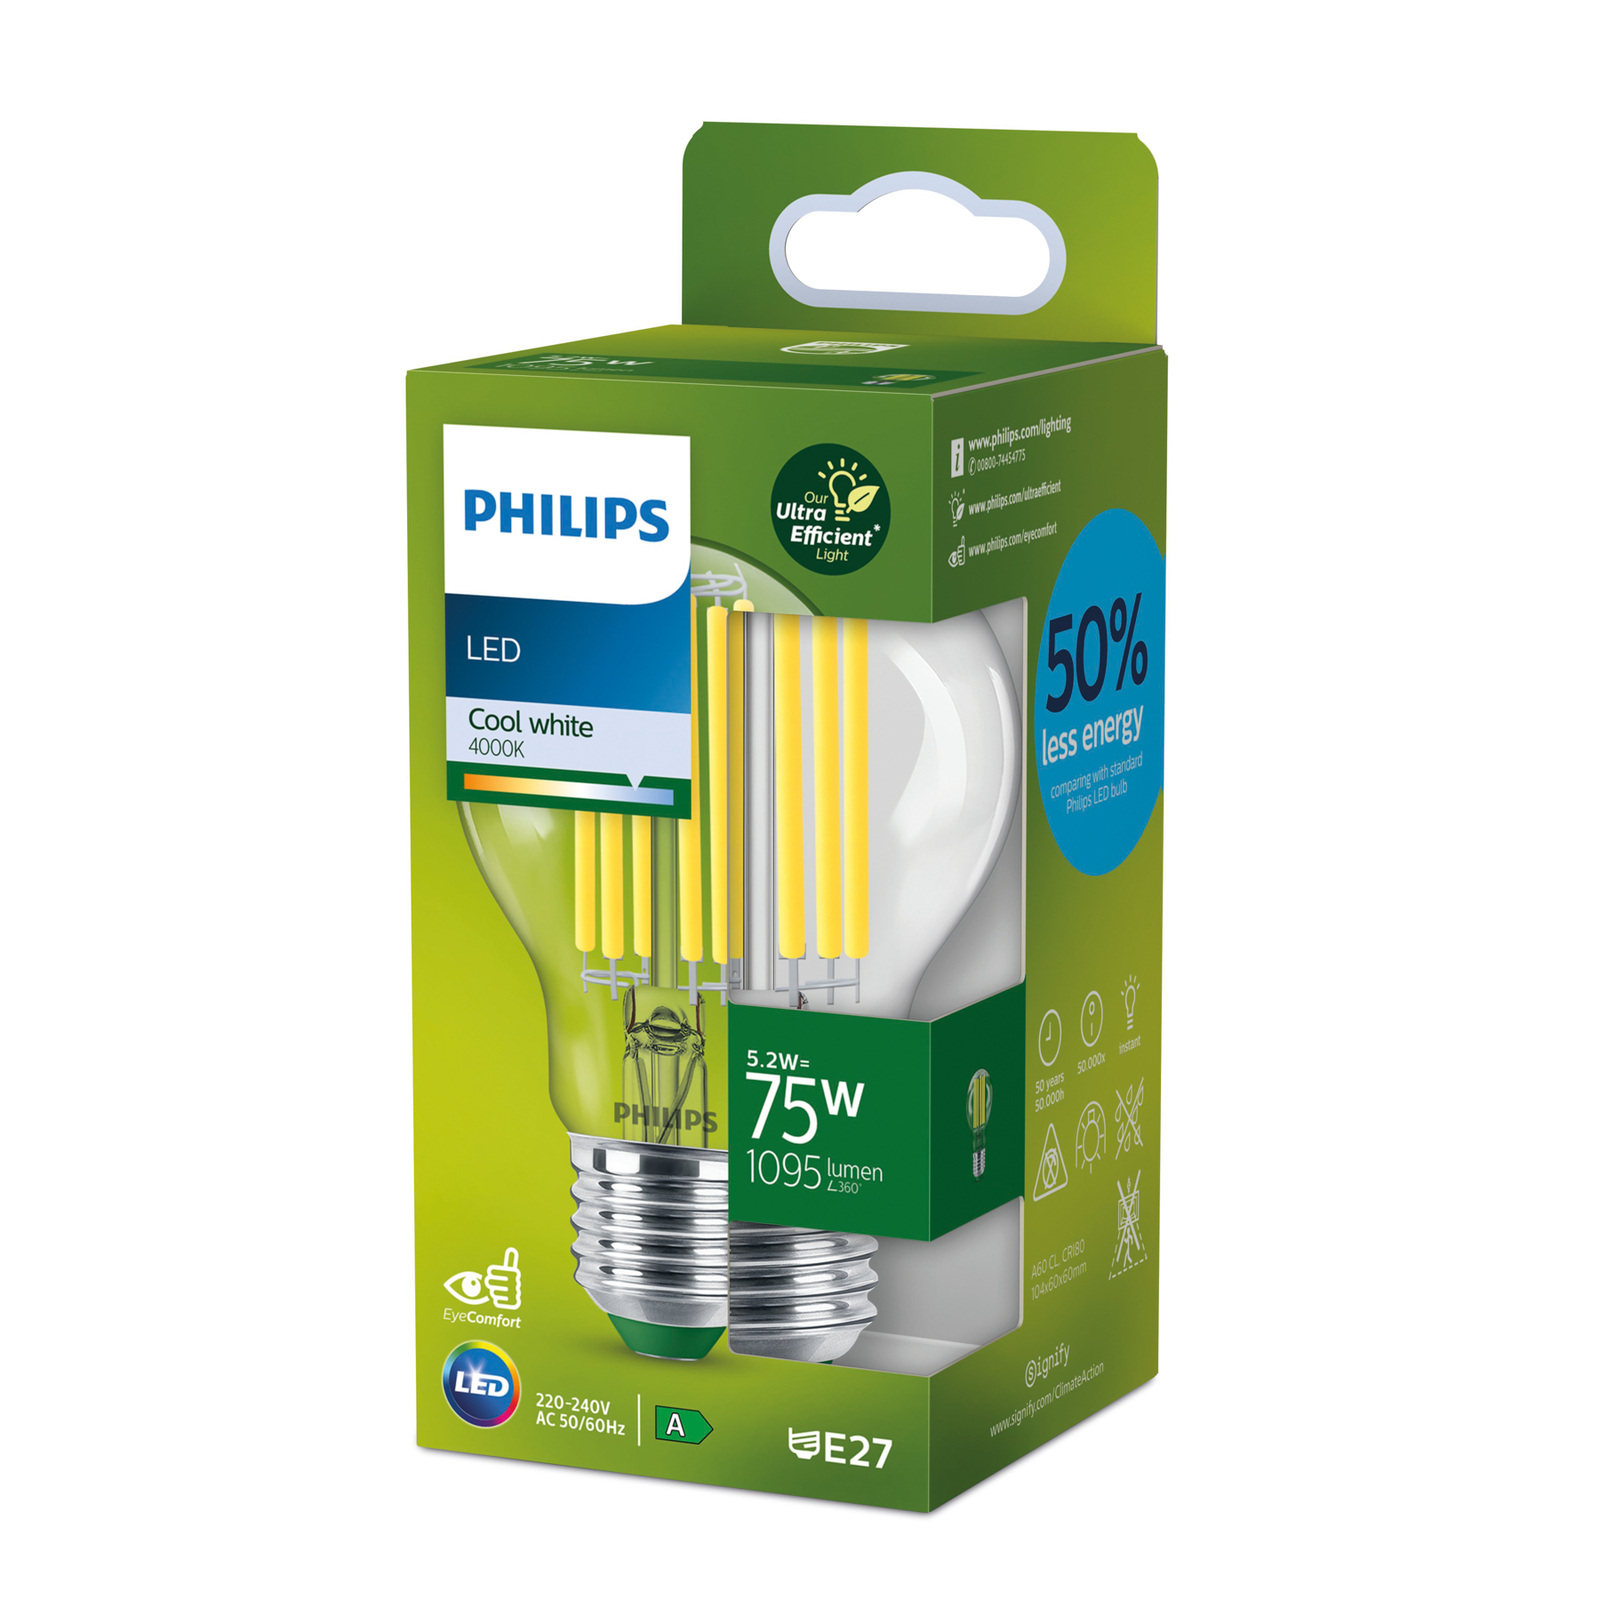 Philips E27 LED bulb A60 5.2W 1095lm 4,000K clear